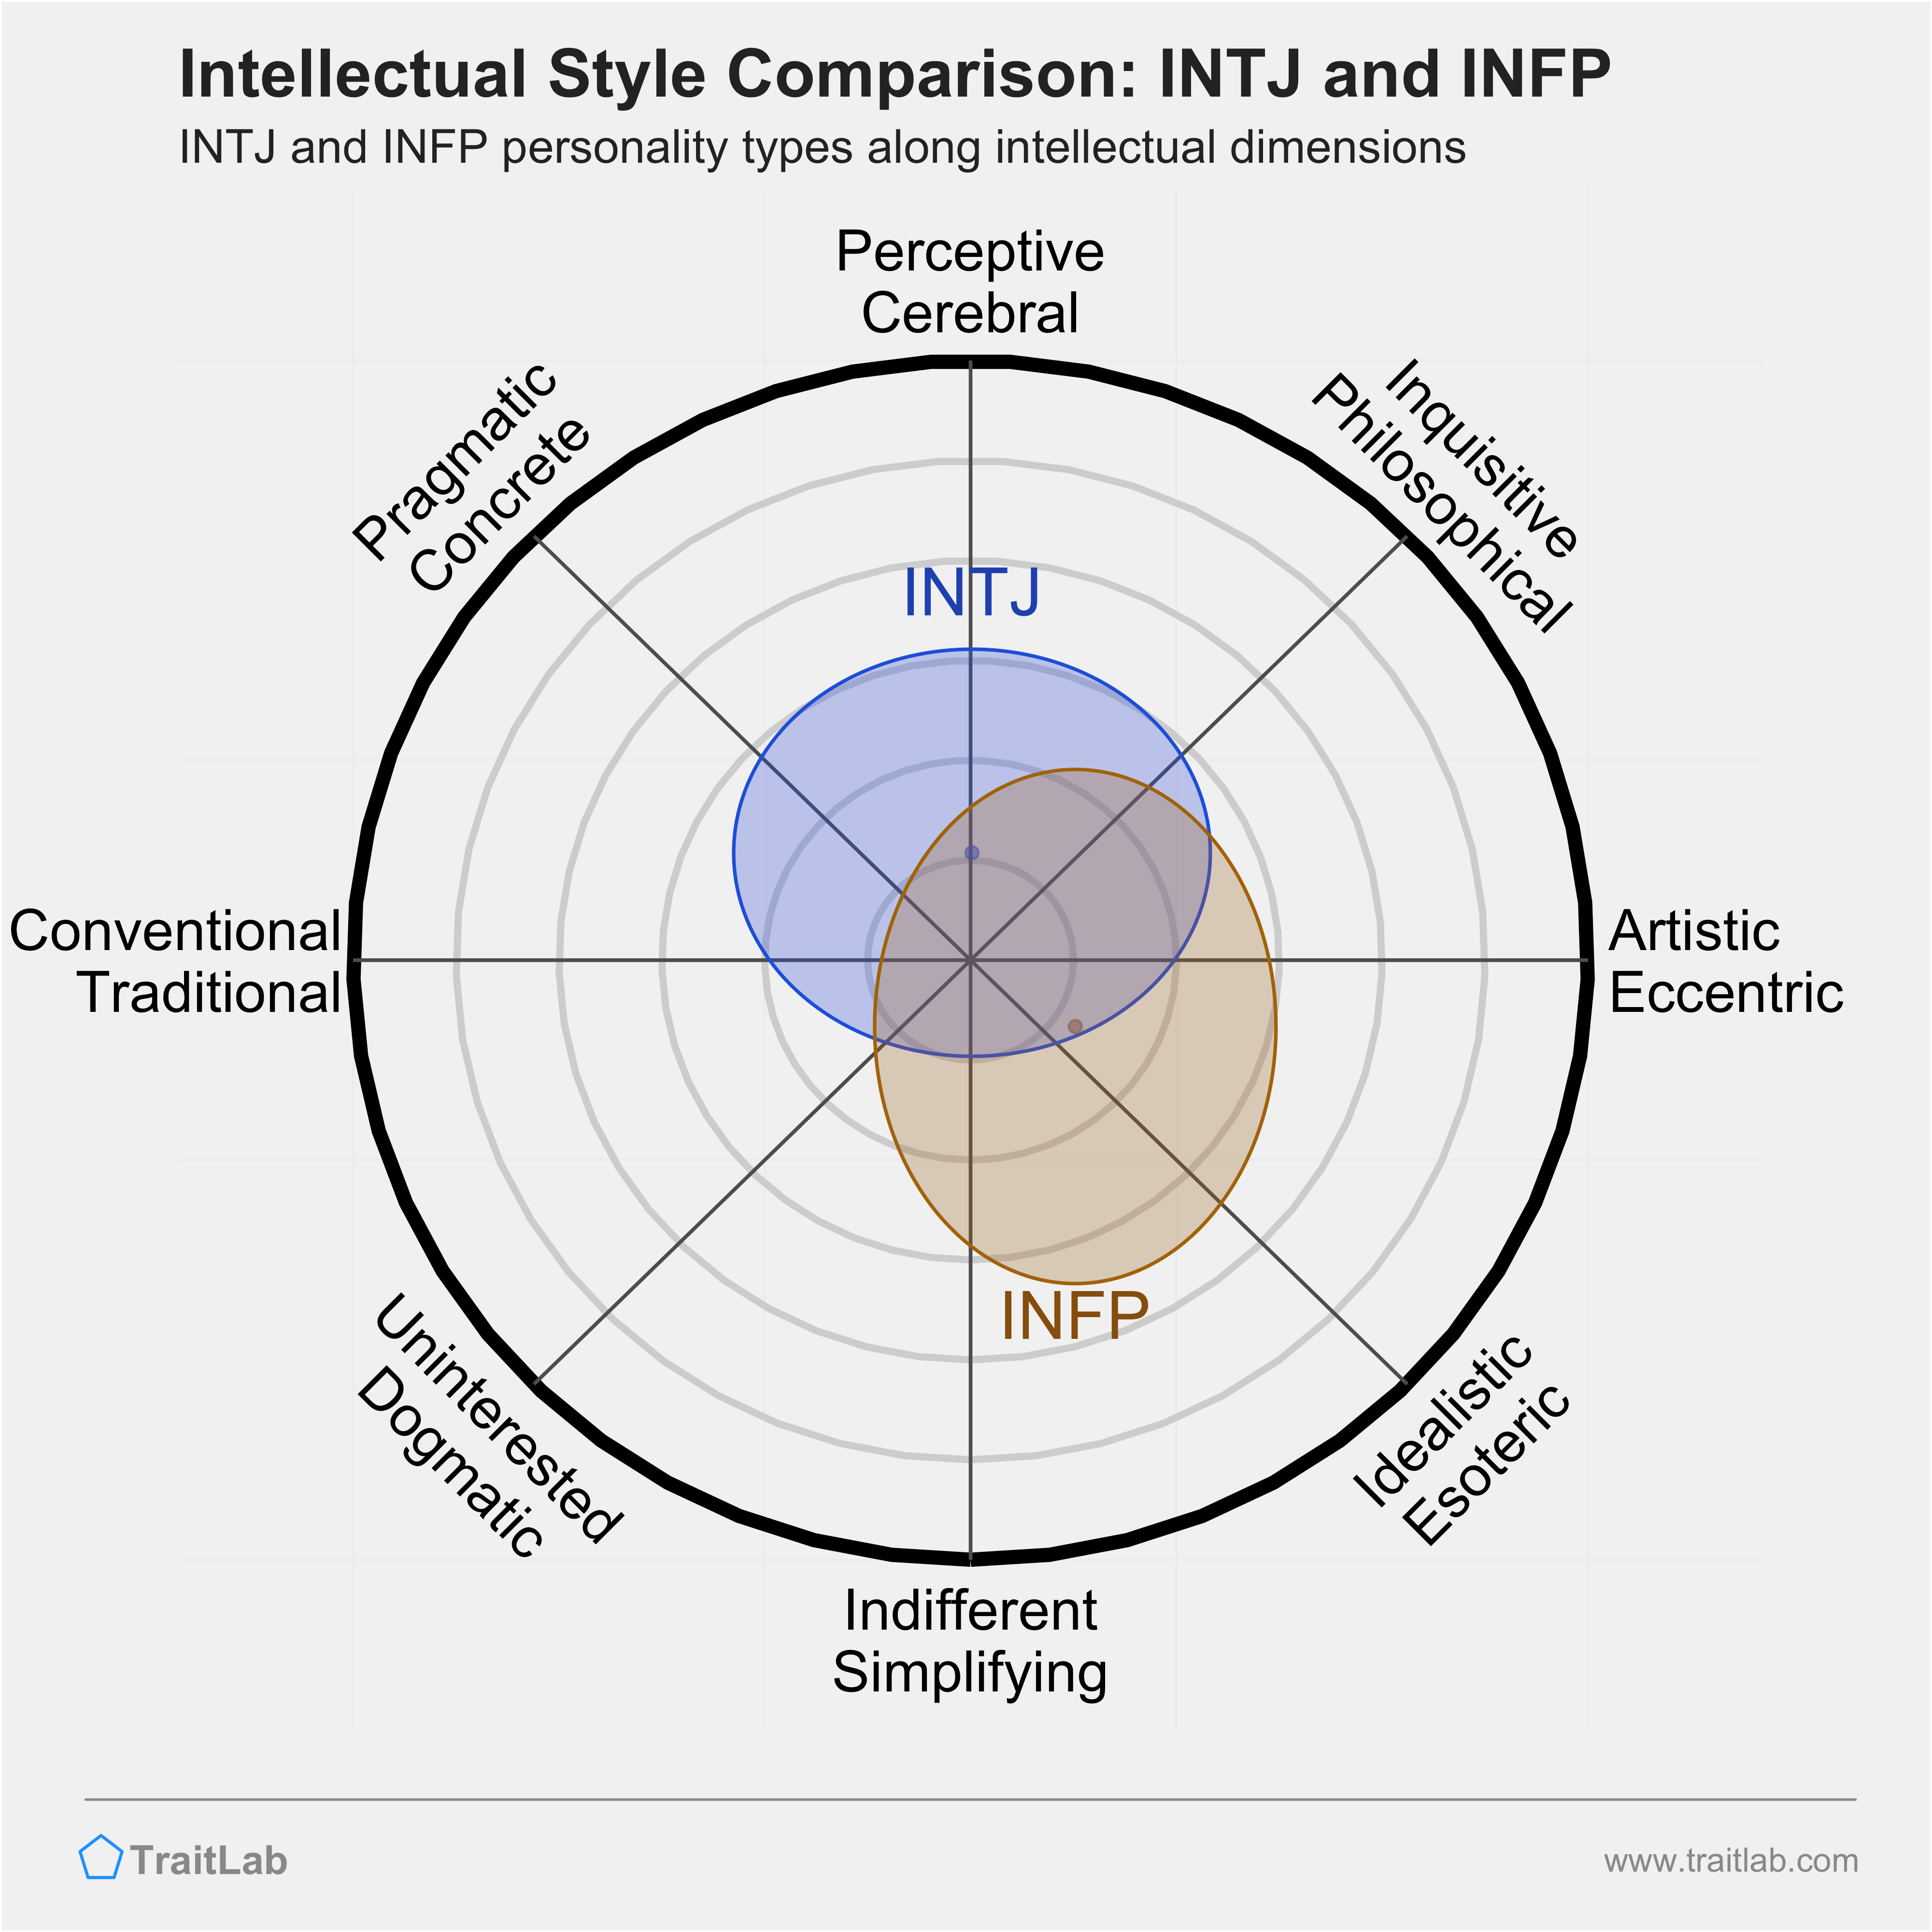 INTJ and INFP comparison across intellectual dimensions